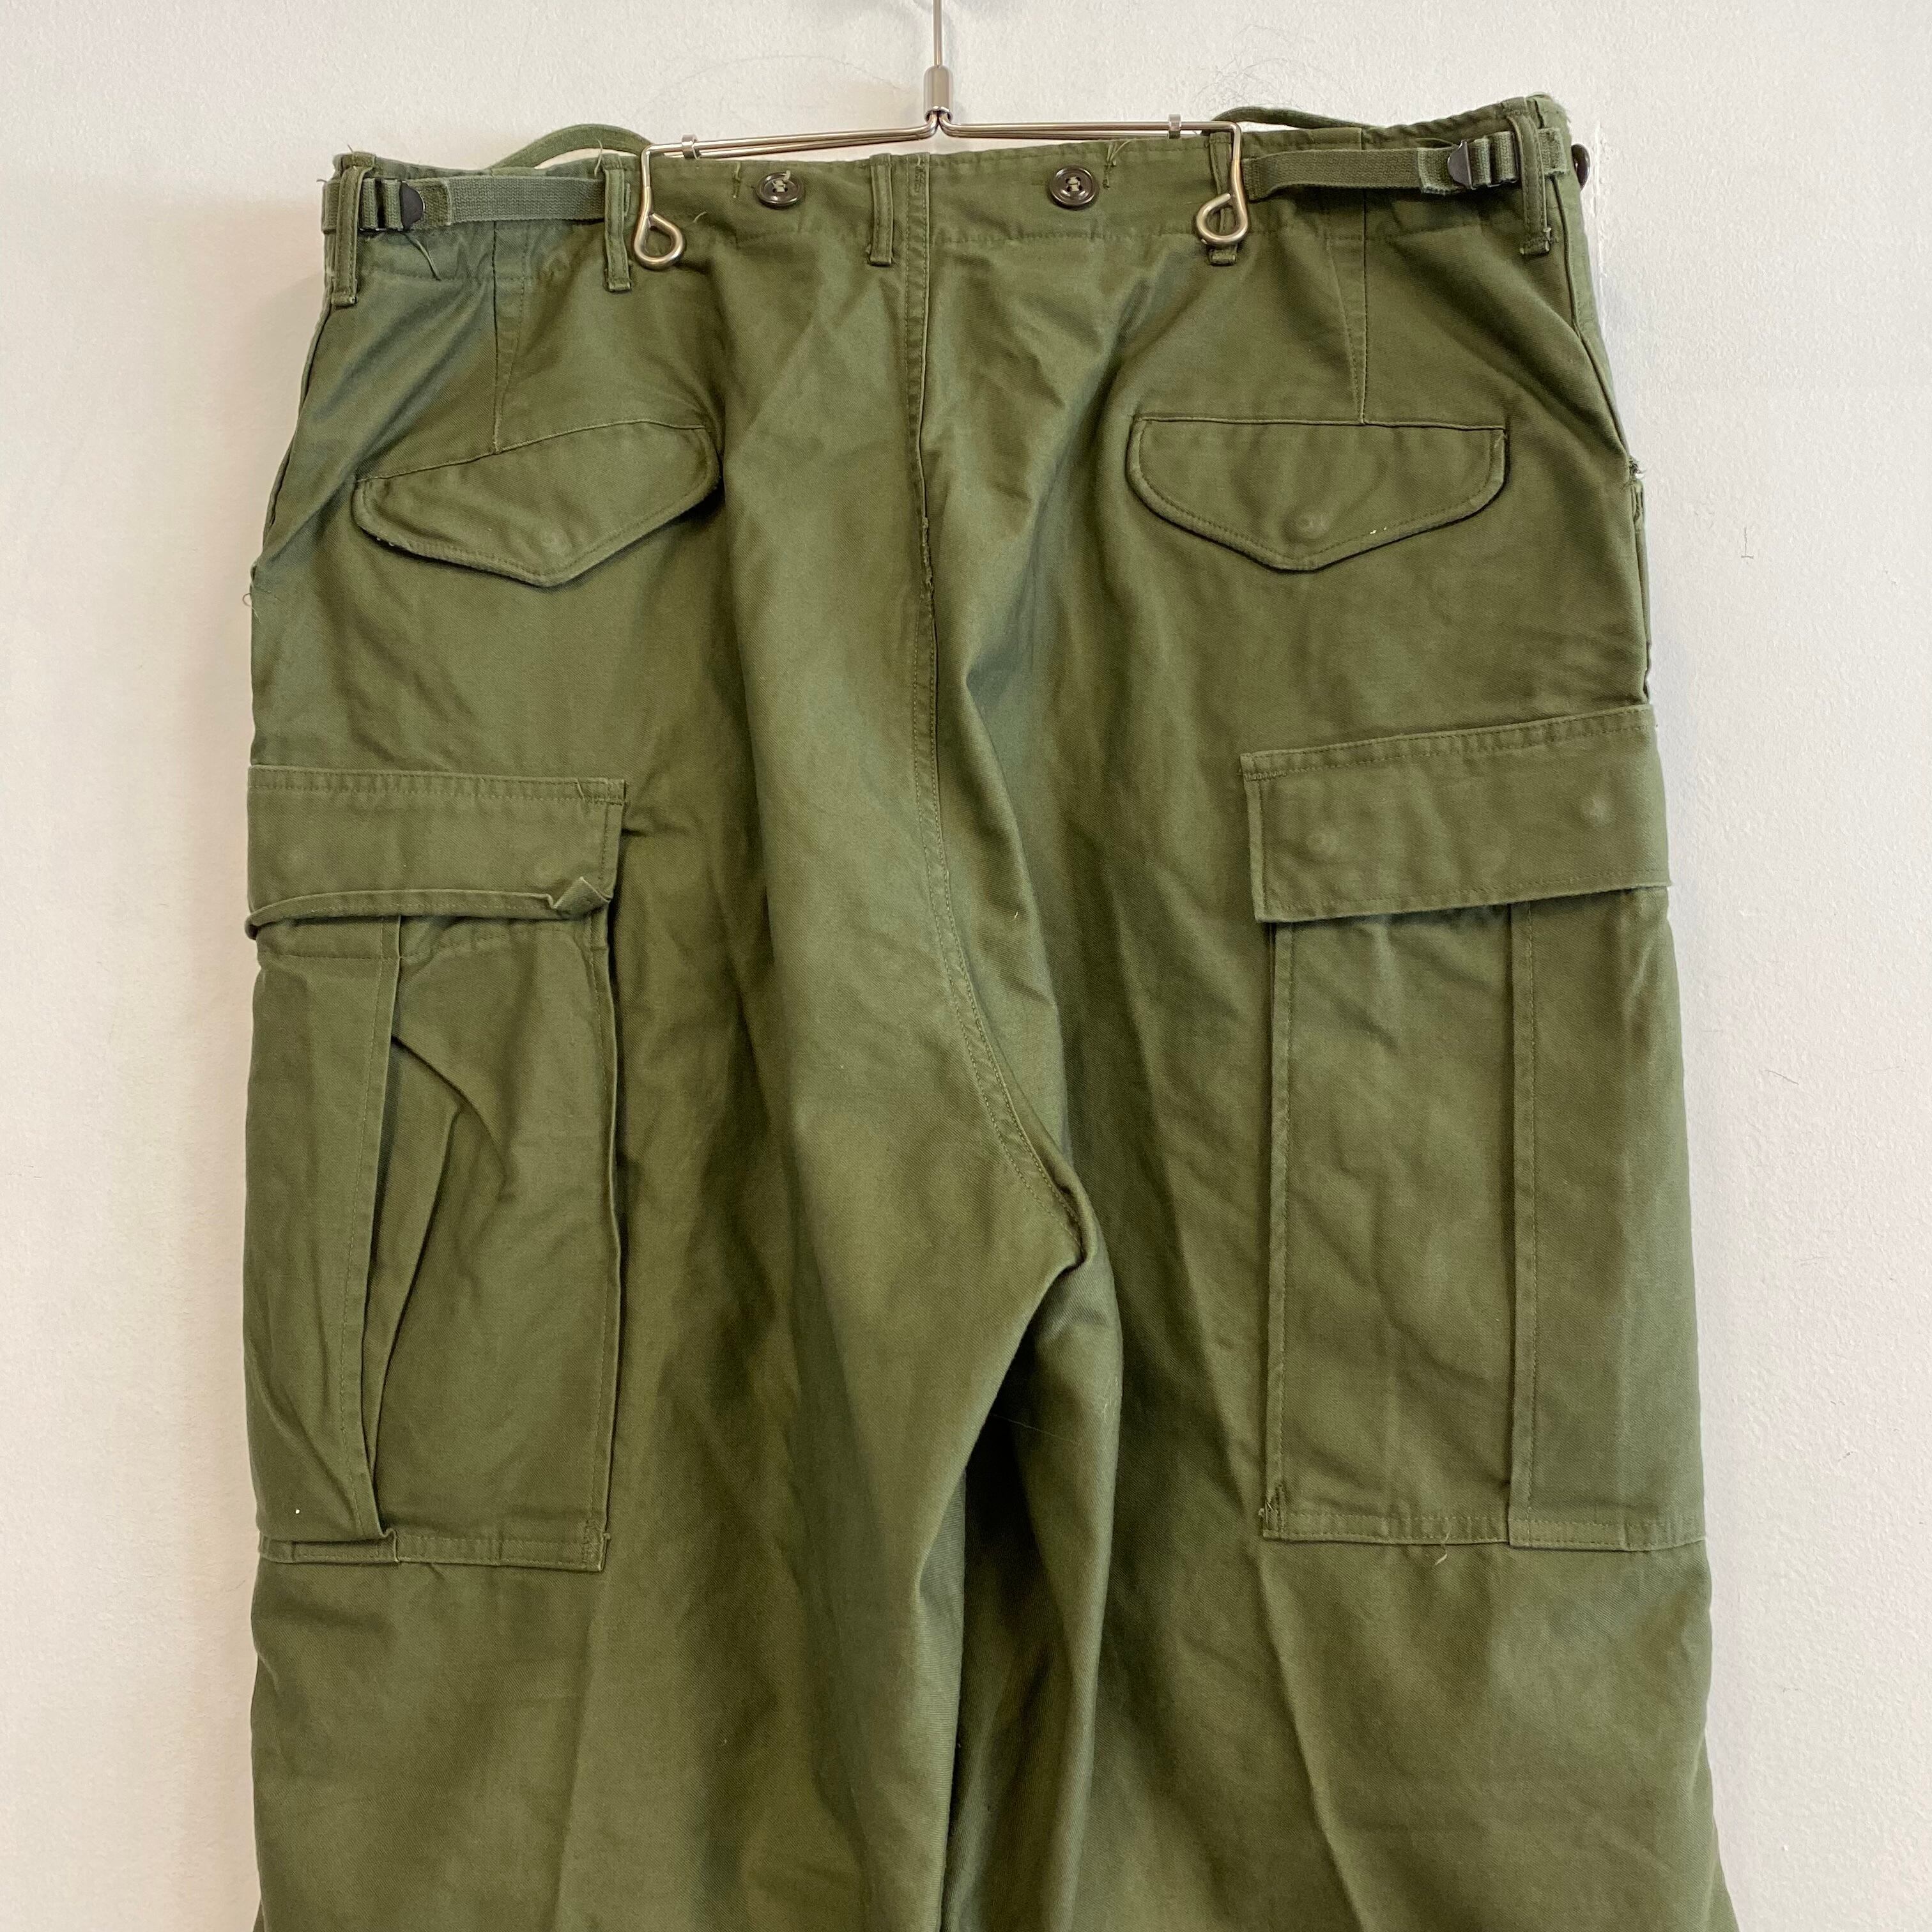 US ARMY used M-51 field pants 